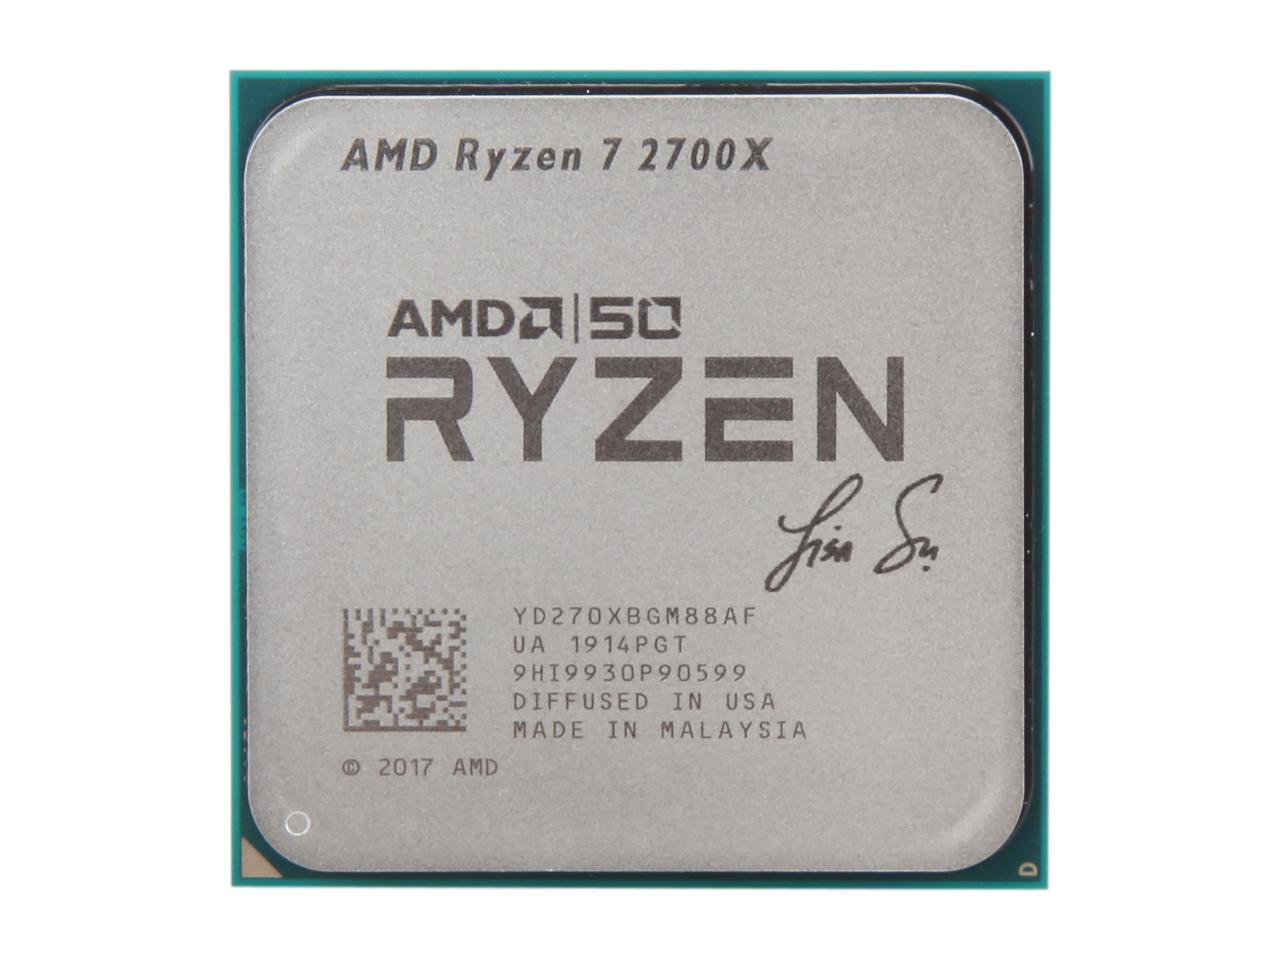 AMD Ryzen 7 2700X AMD50 Gold Edition 3.7 GHz (4.3 GHz Max Boost 